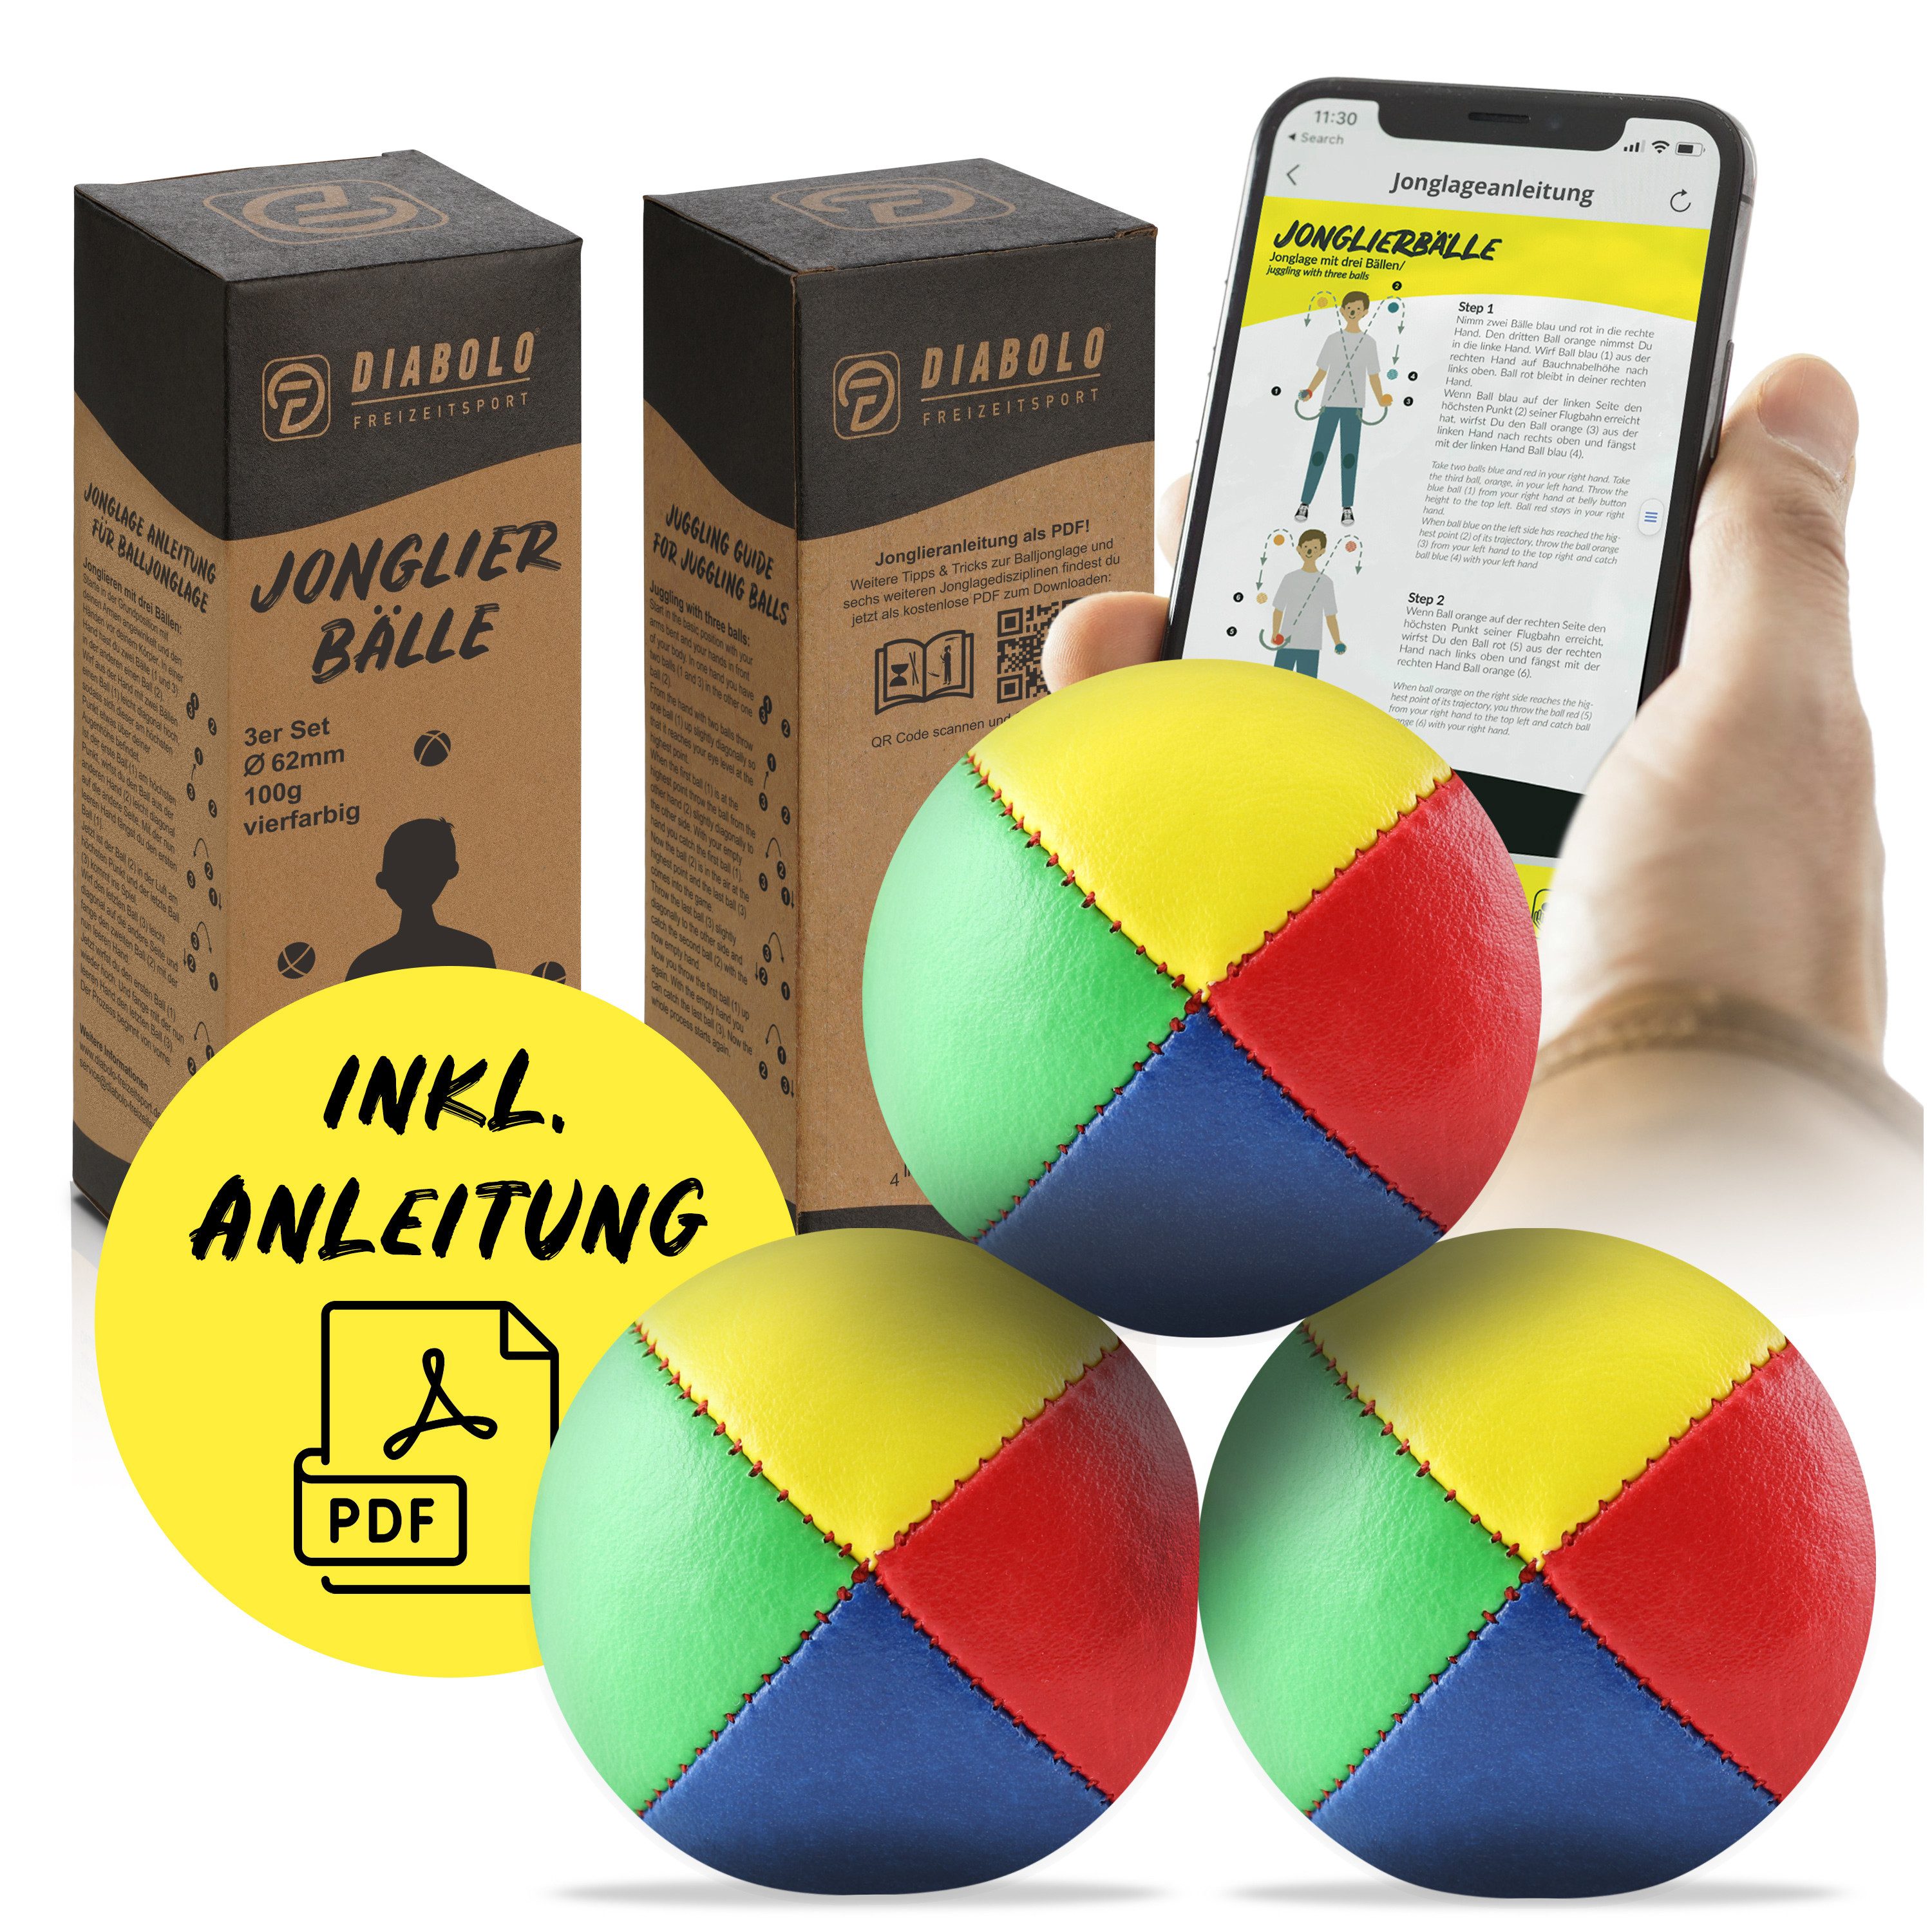 Diabolo Freizeitsport Spielball zum Jonglieren (Jonglierbälle 62mm, 3 Stk. im Set, vierfarbig)